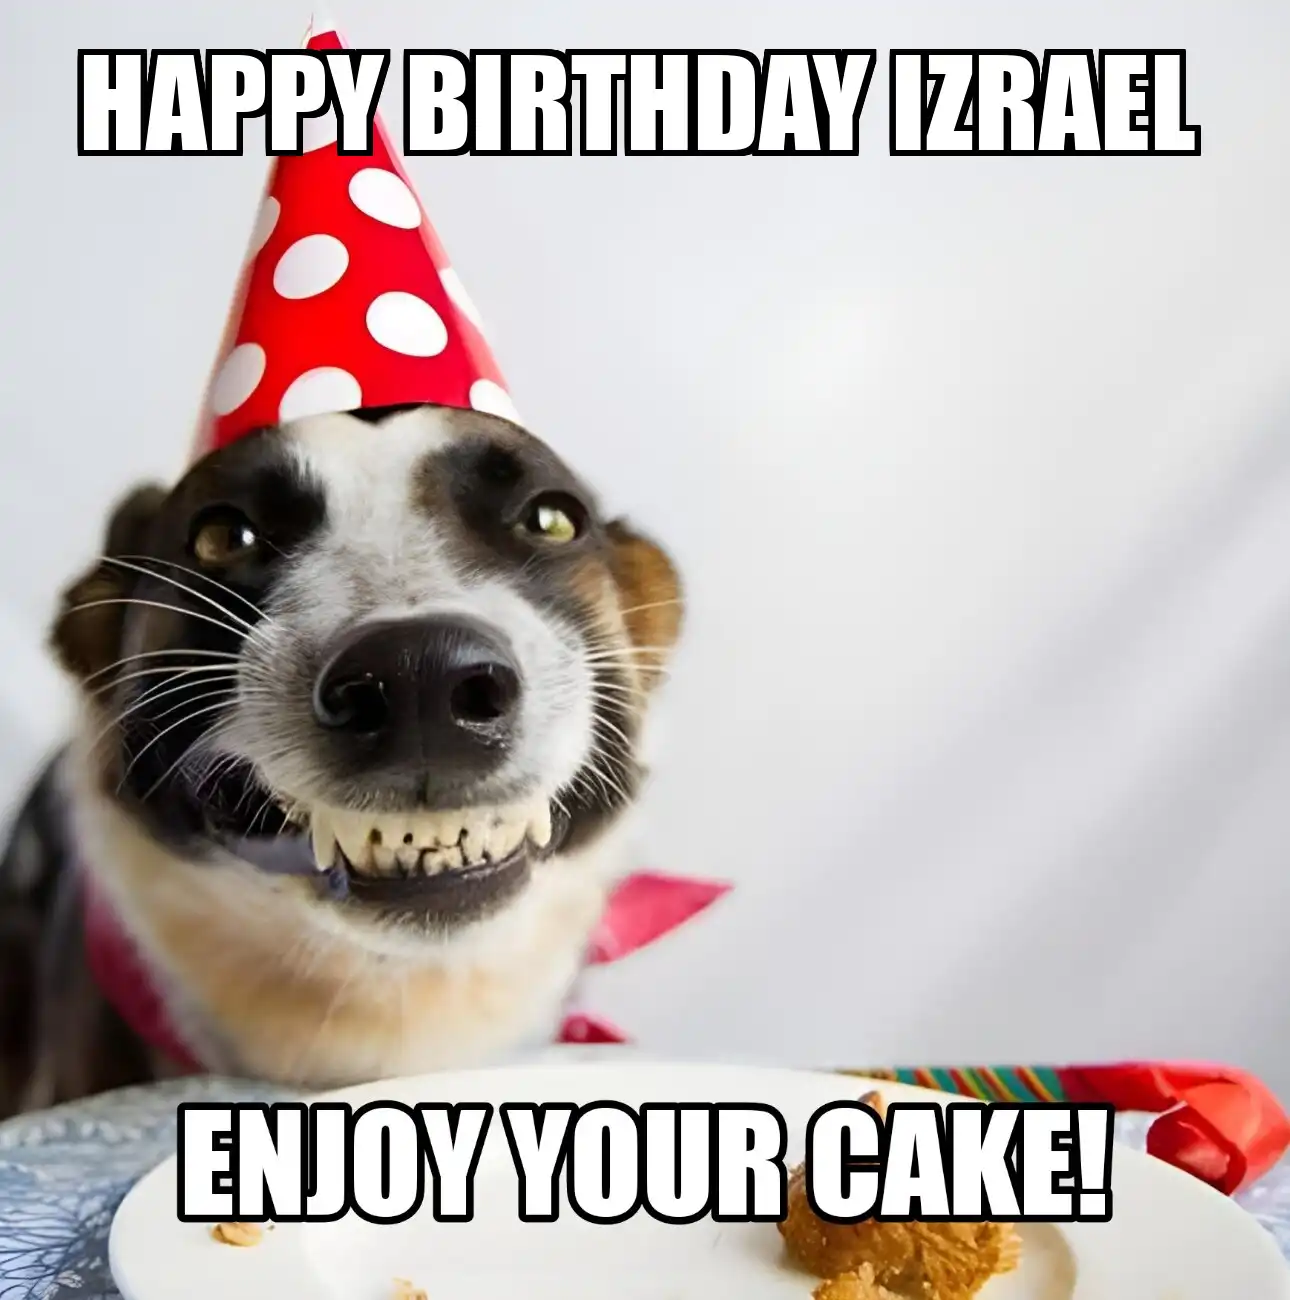 Happy Birthday Izrael Enjoy Your Cake Dog Meme